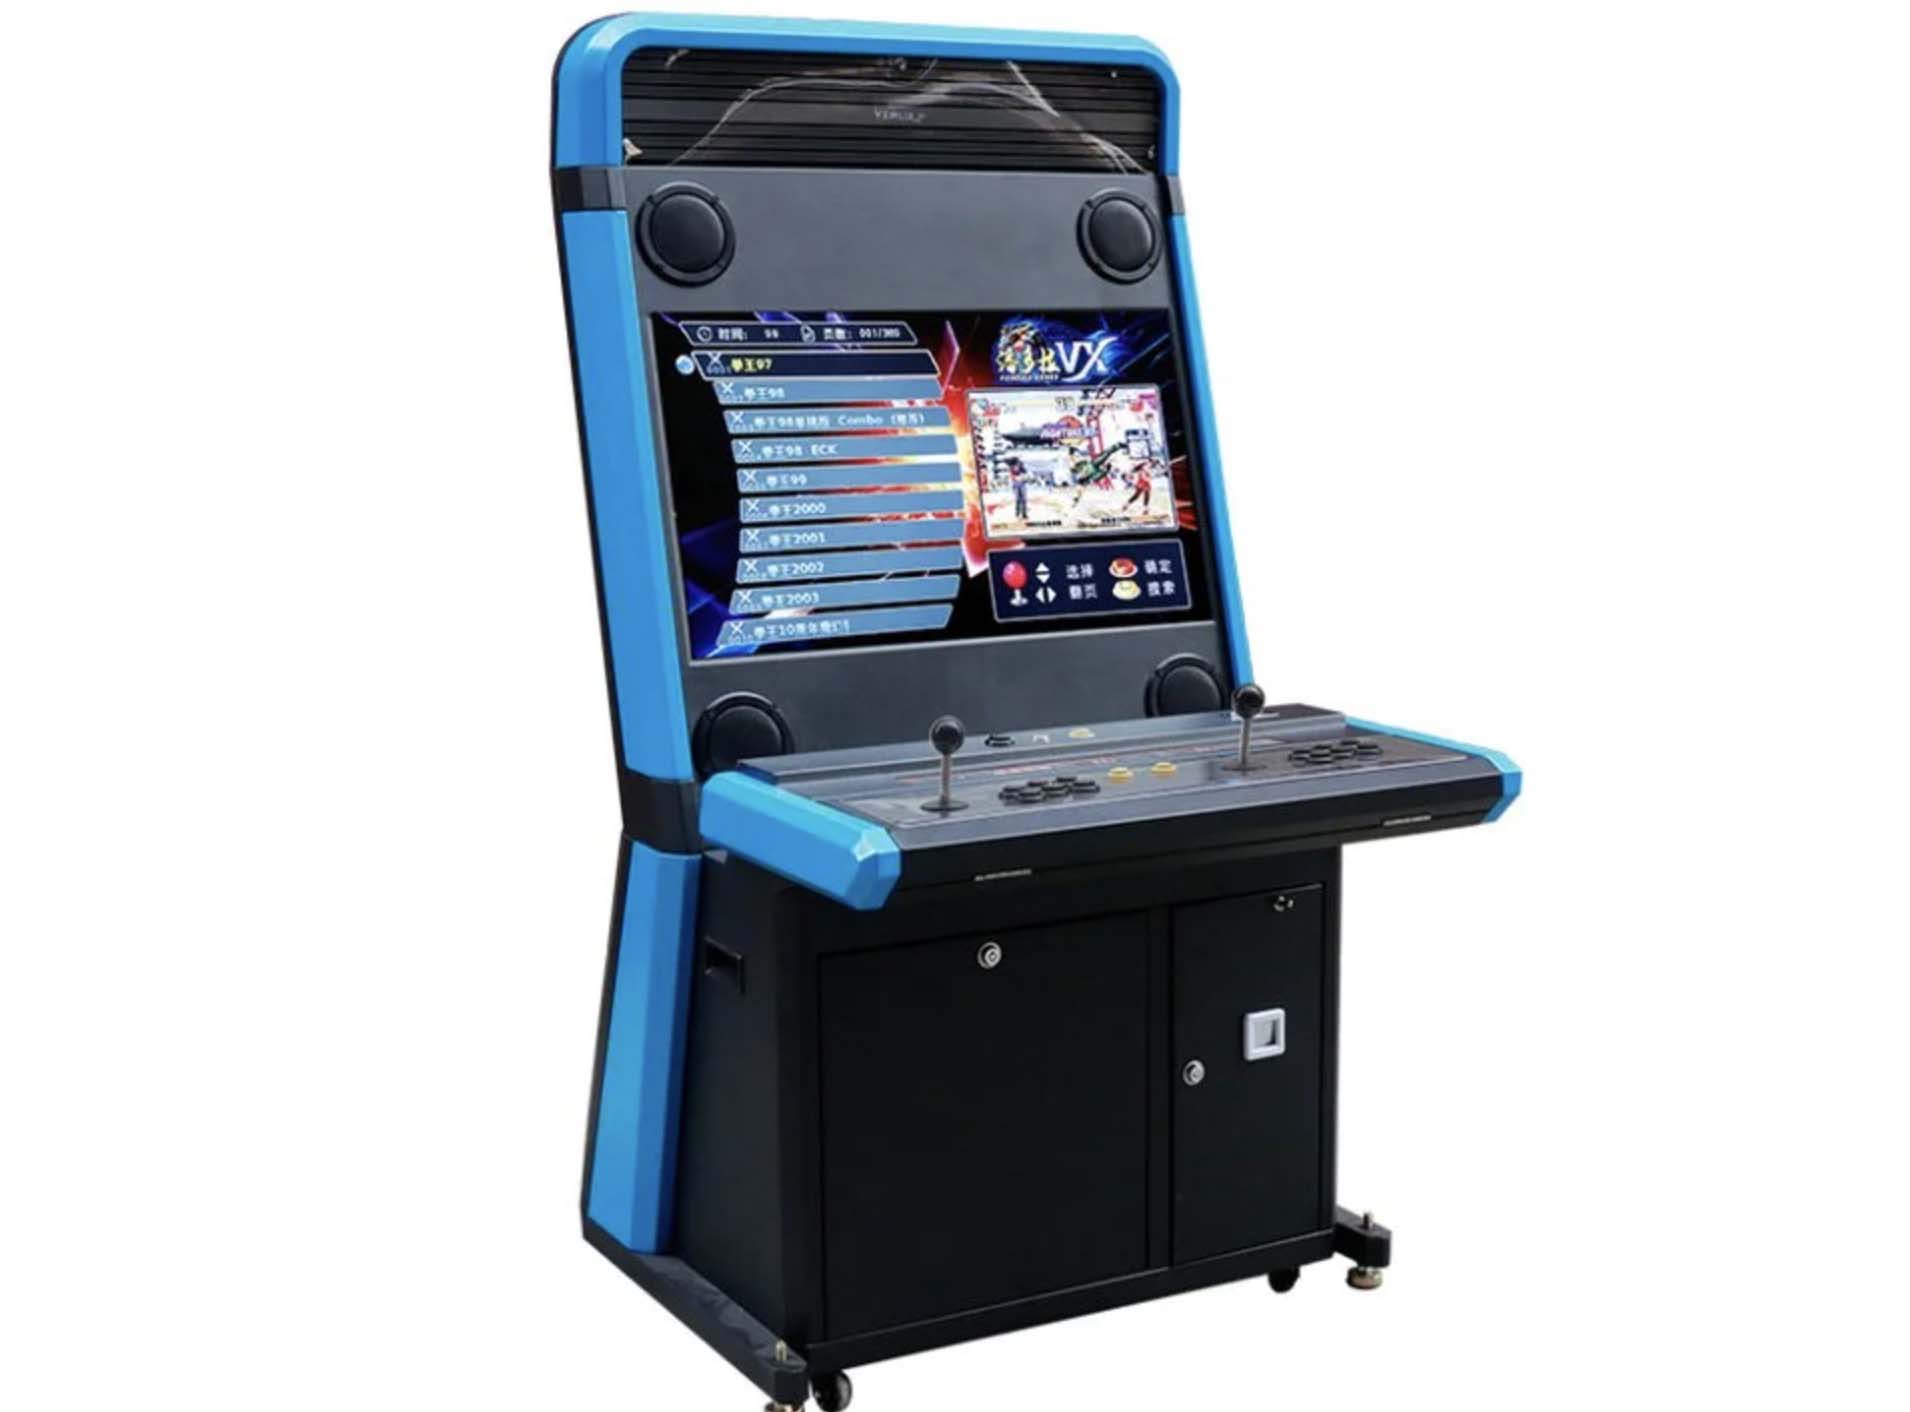 60 in 1 multicade arcade machine